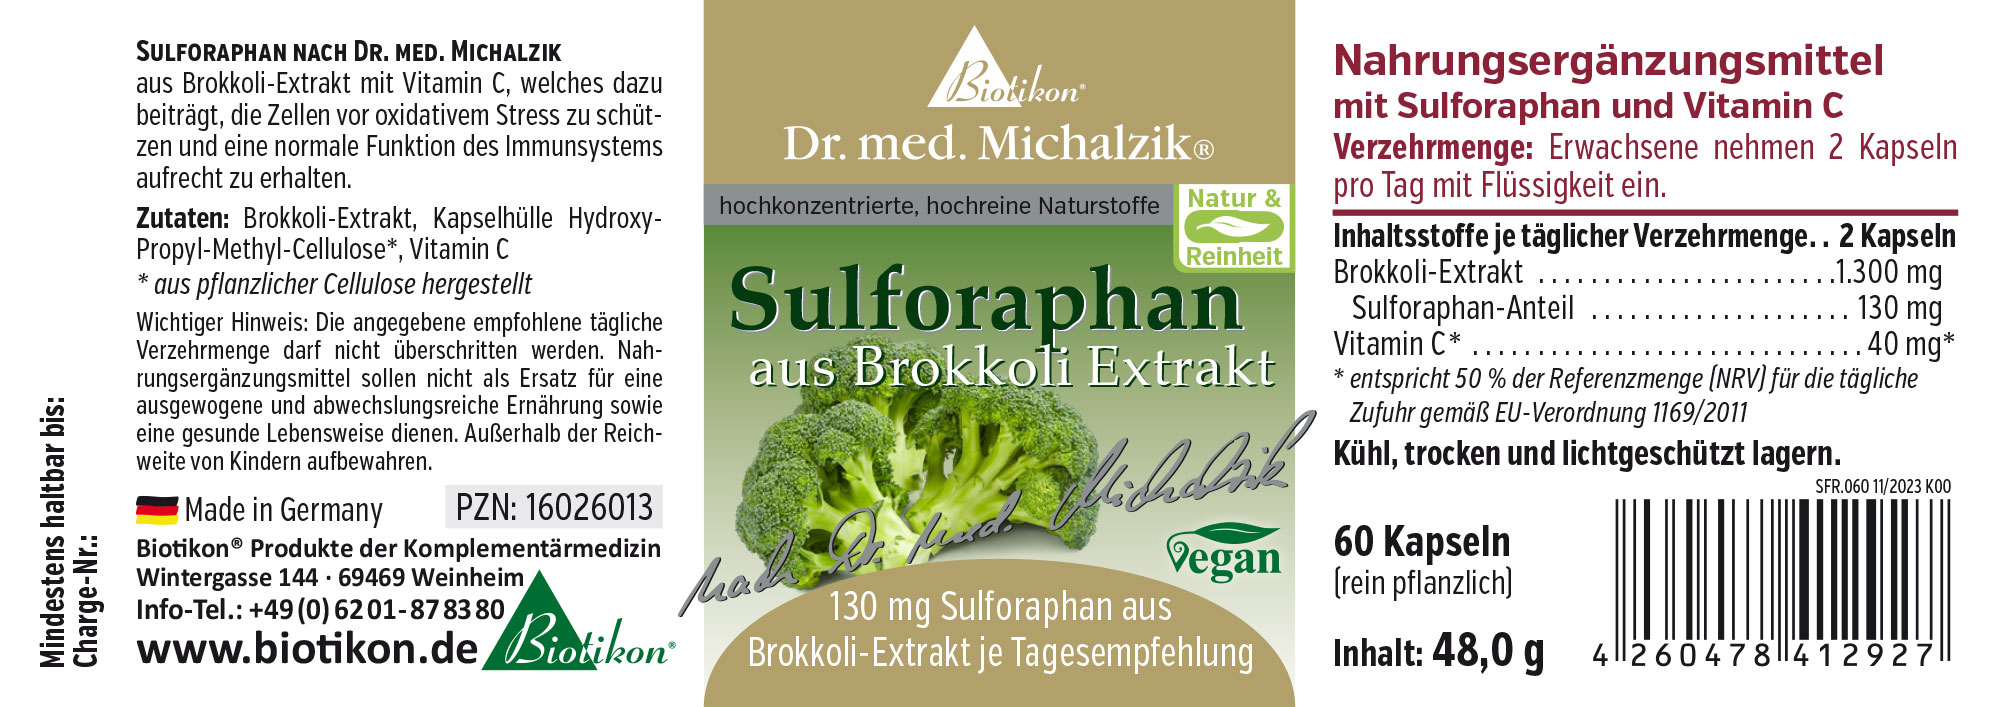 Sulforaphan aus Brokkoli-Extrakt